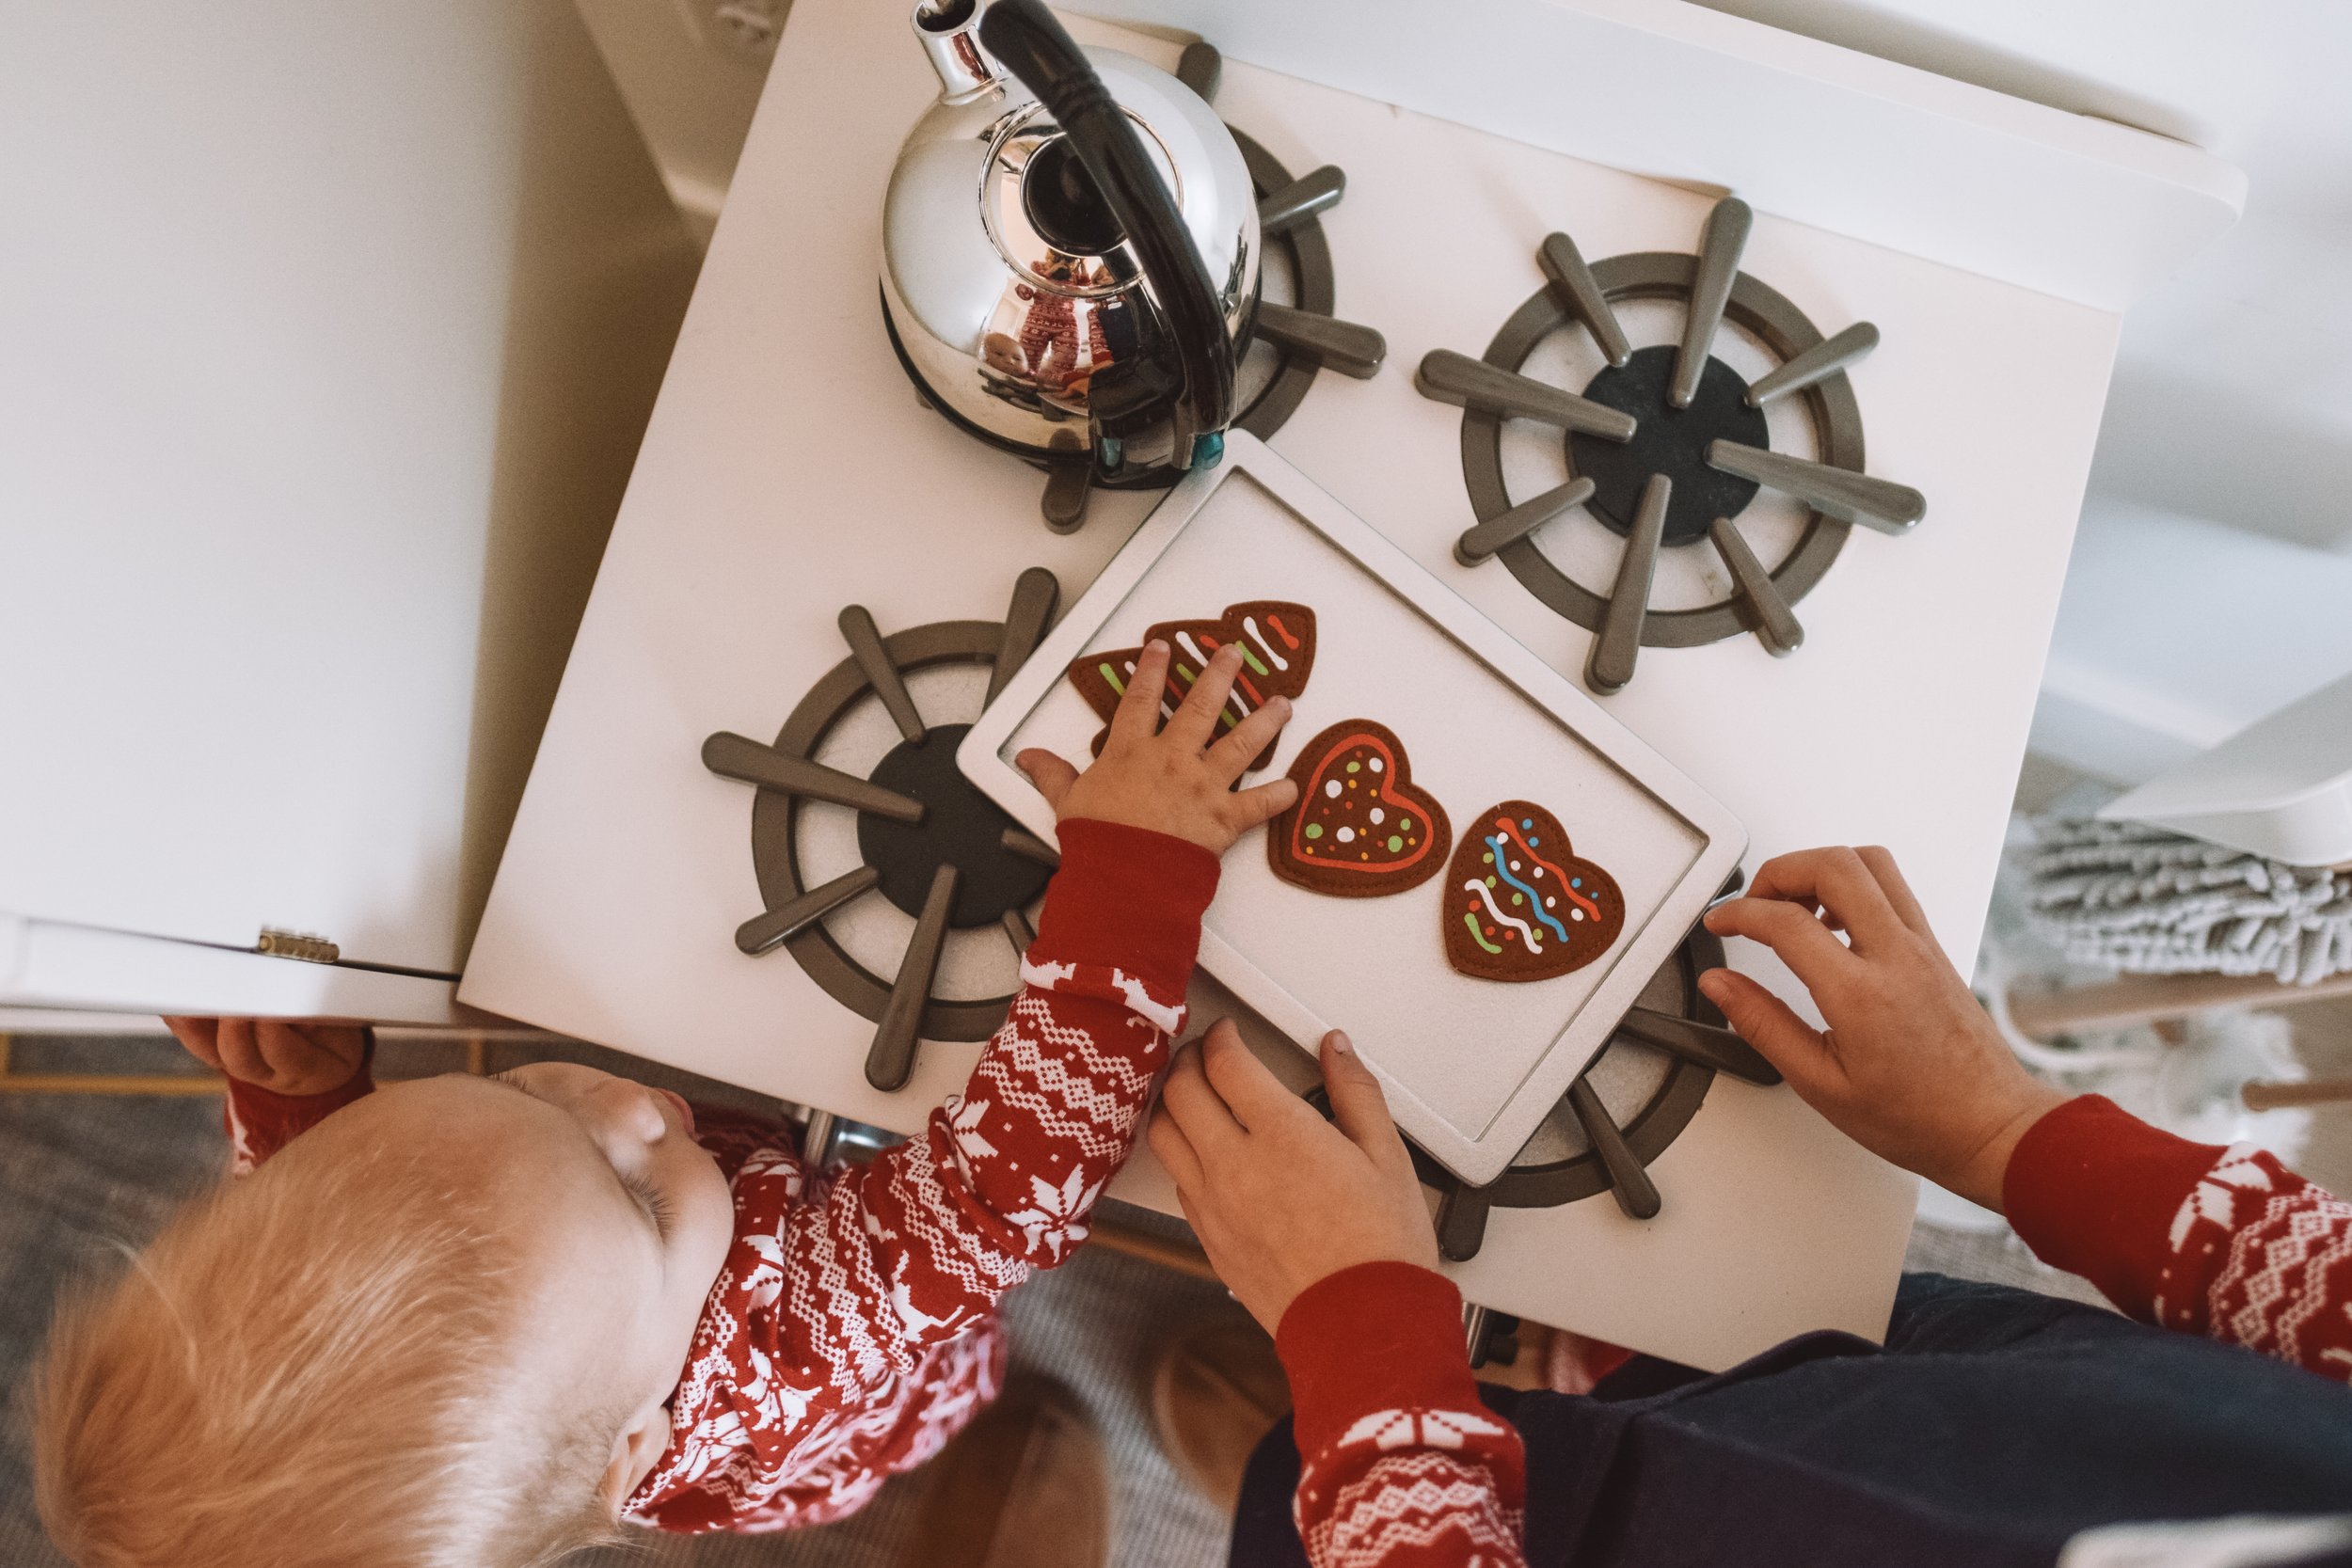 Kids Holiday Gift Ideas - Kids Play Kitchen